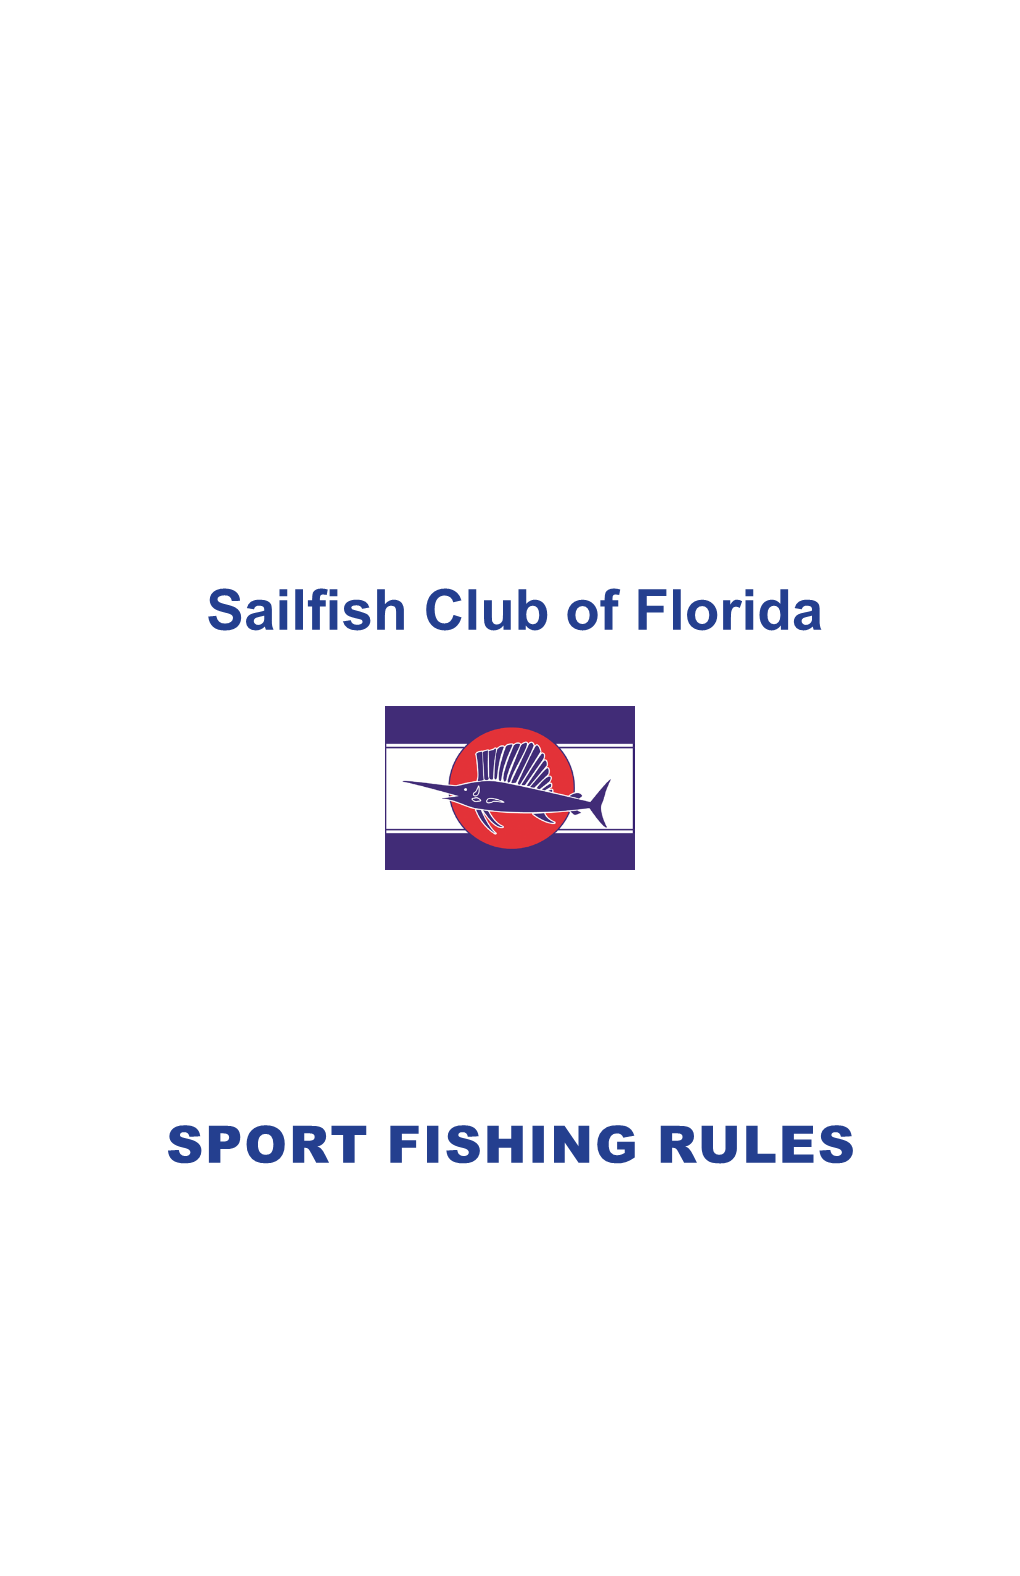 The Sailfish Club of Florida's Sport of Fishing